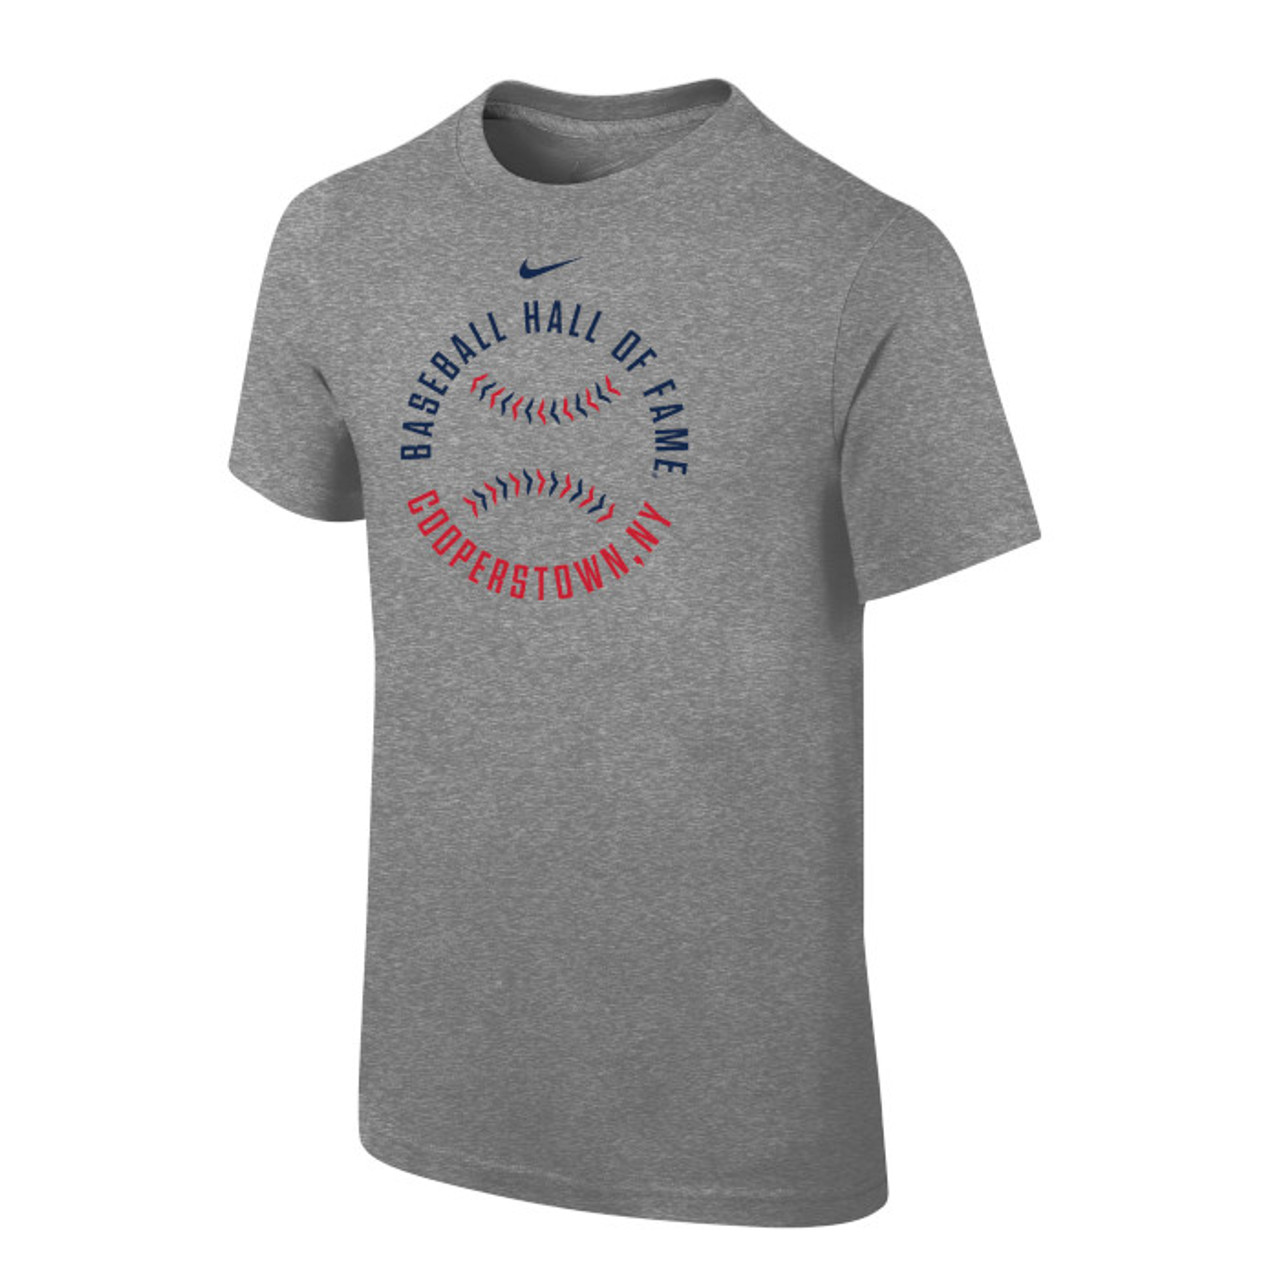 Youth Nike Baseball Hall of Fame Stitches Dark Grey Heather T-Shirt